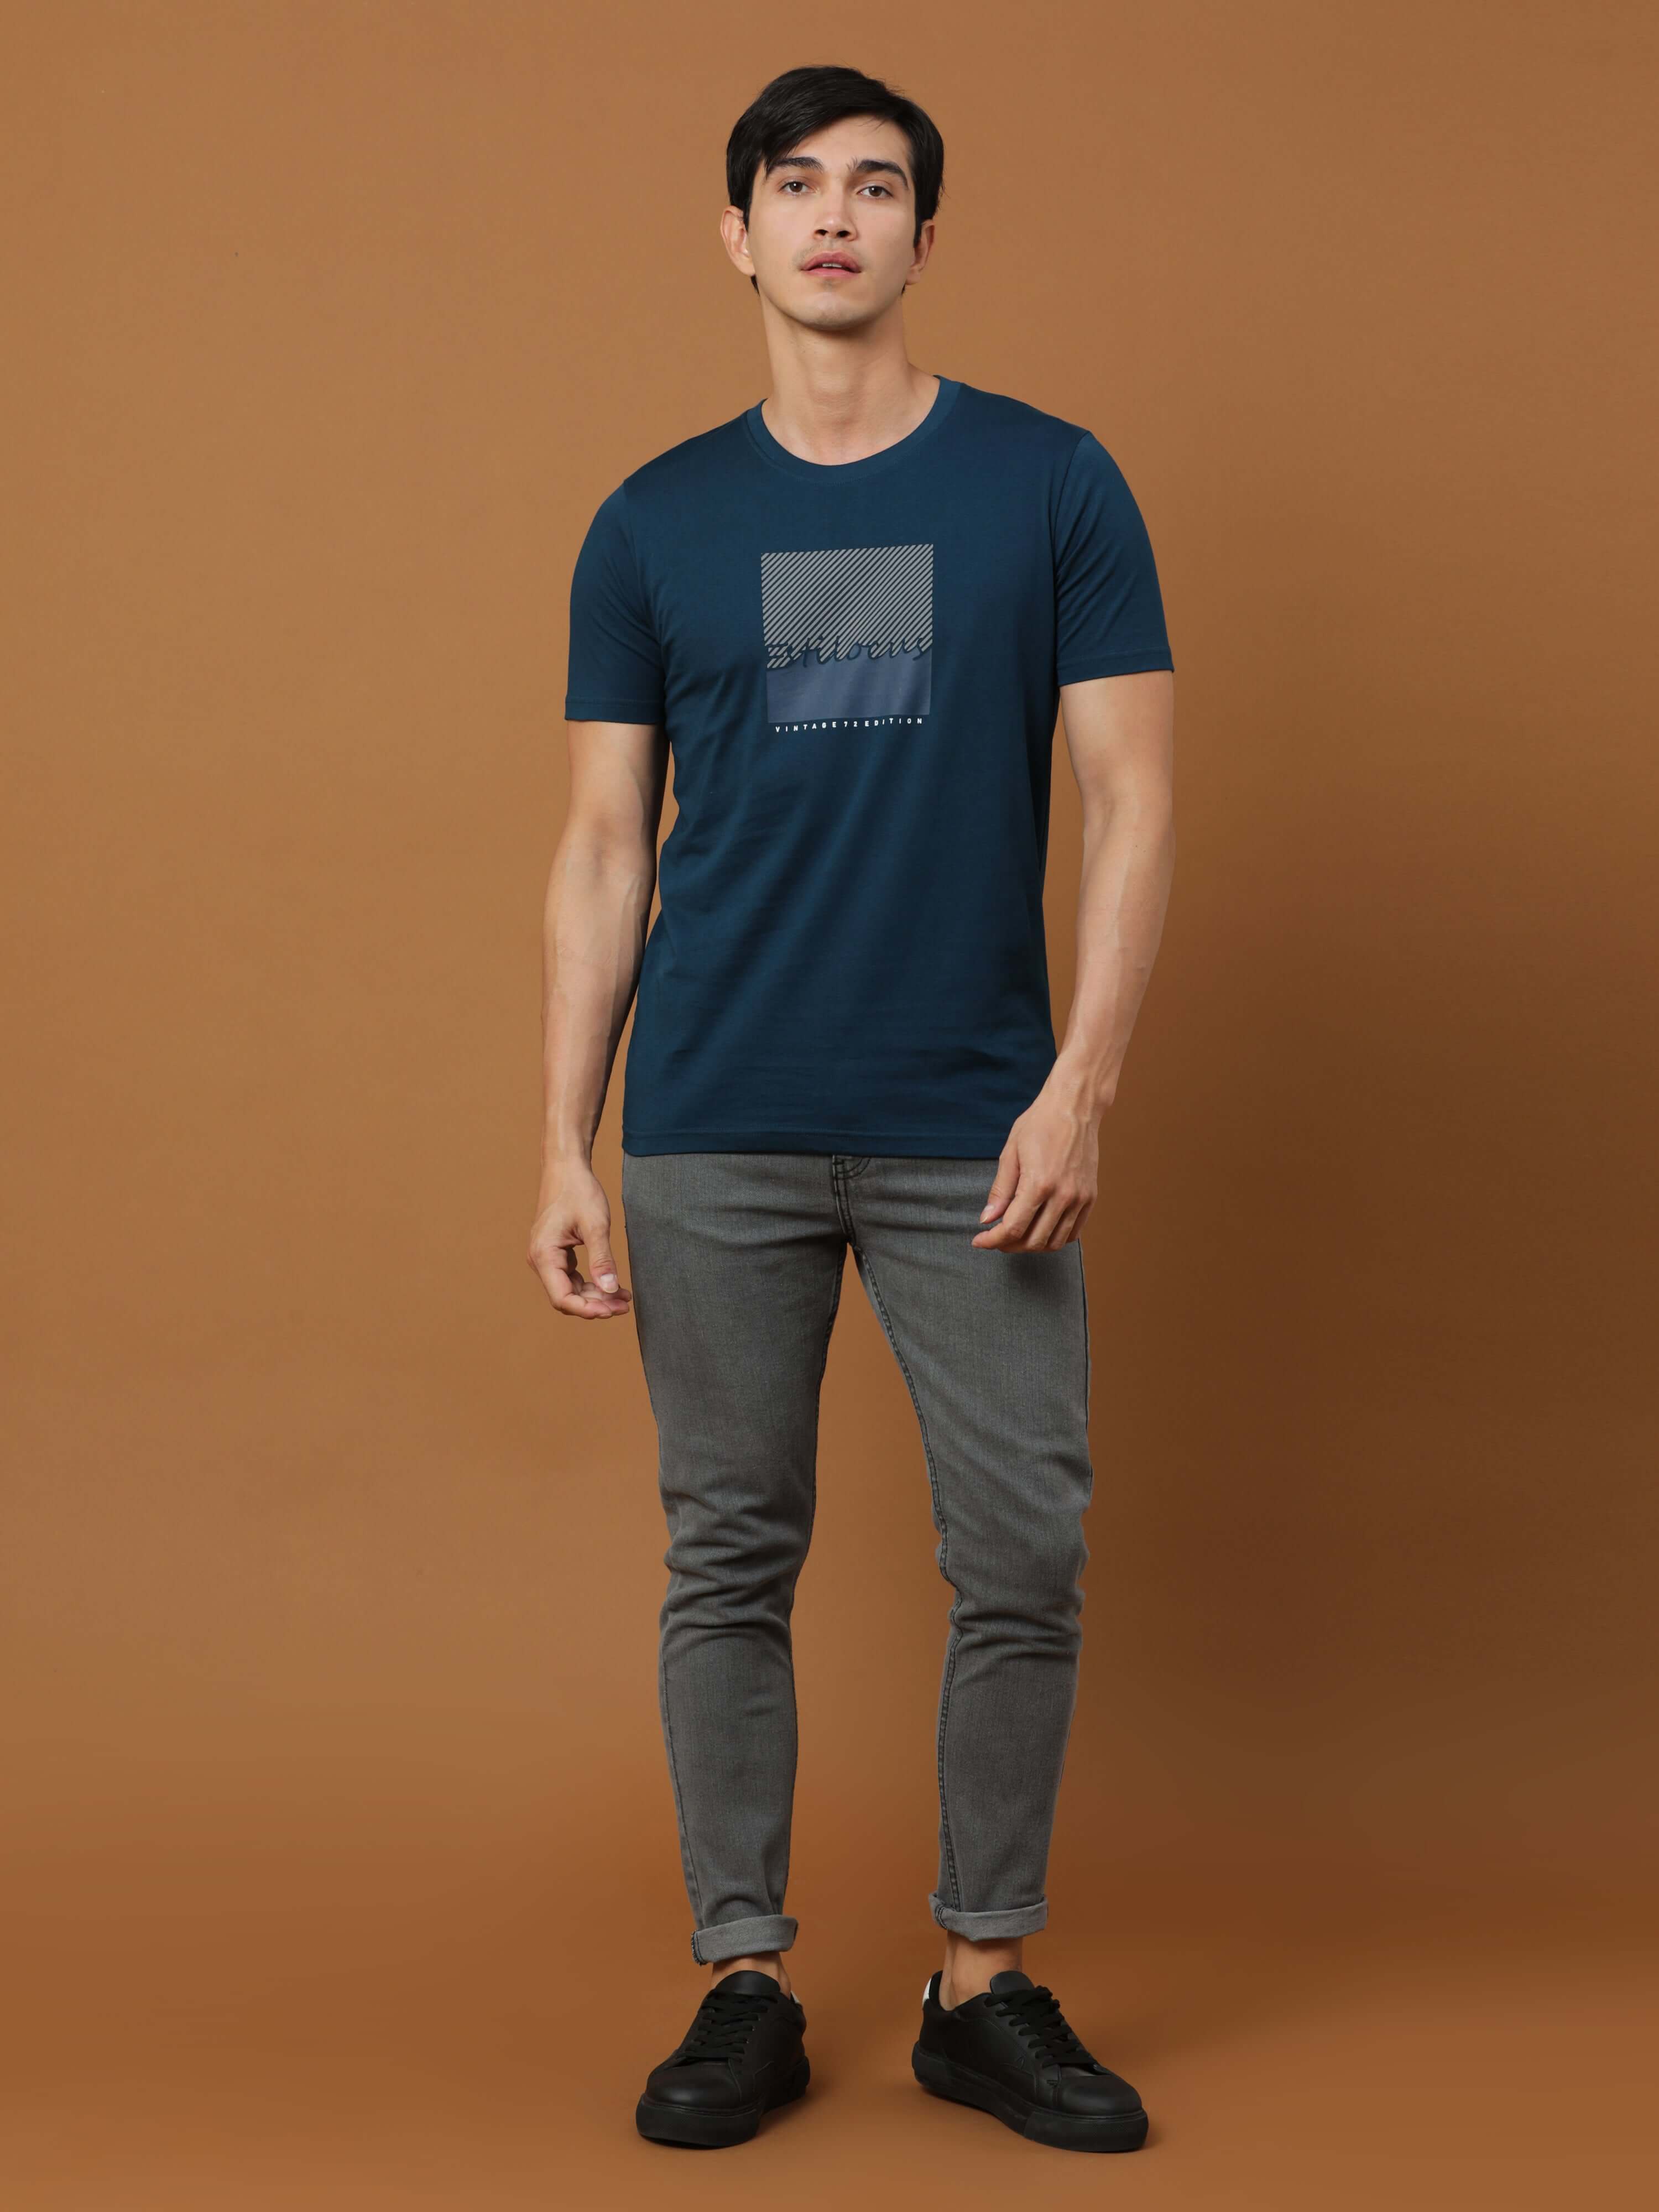 Teal Blue Vintage 72 Edition T Shirt